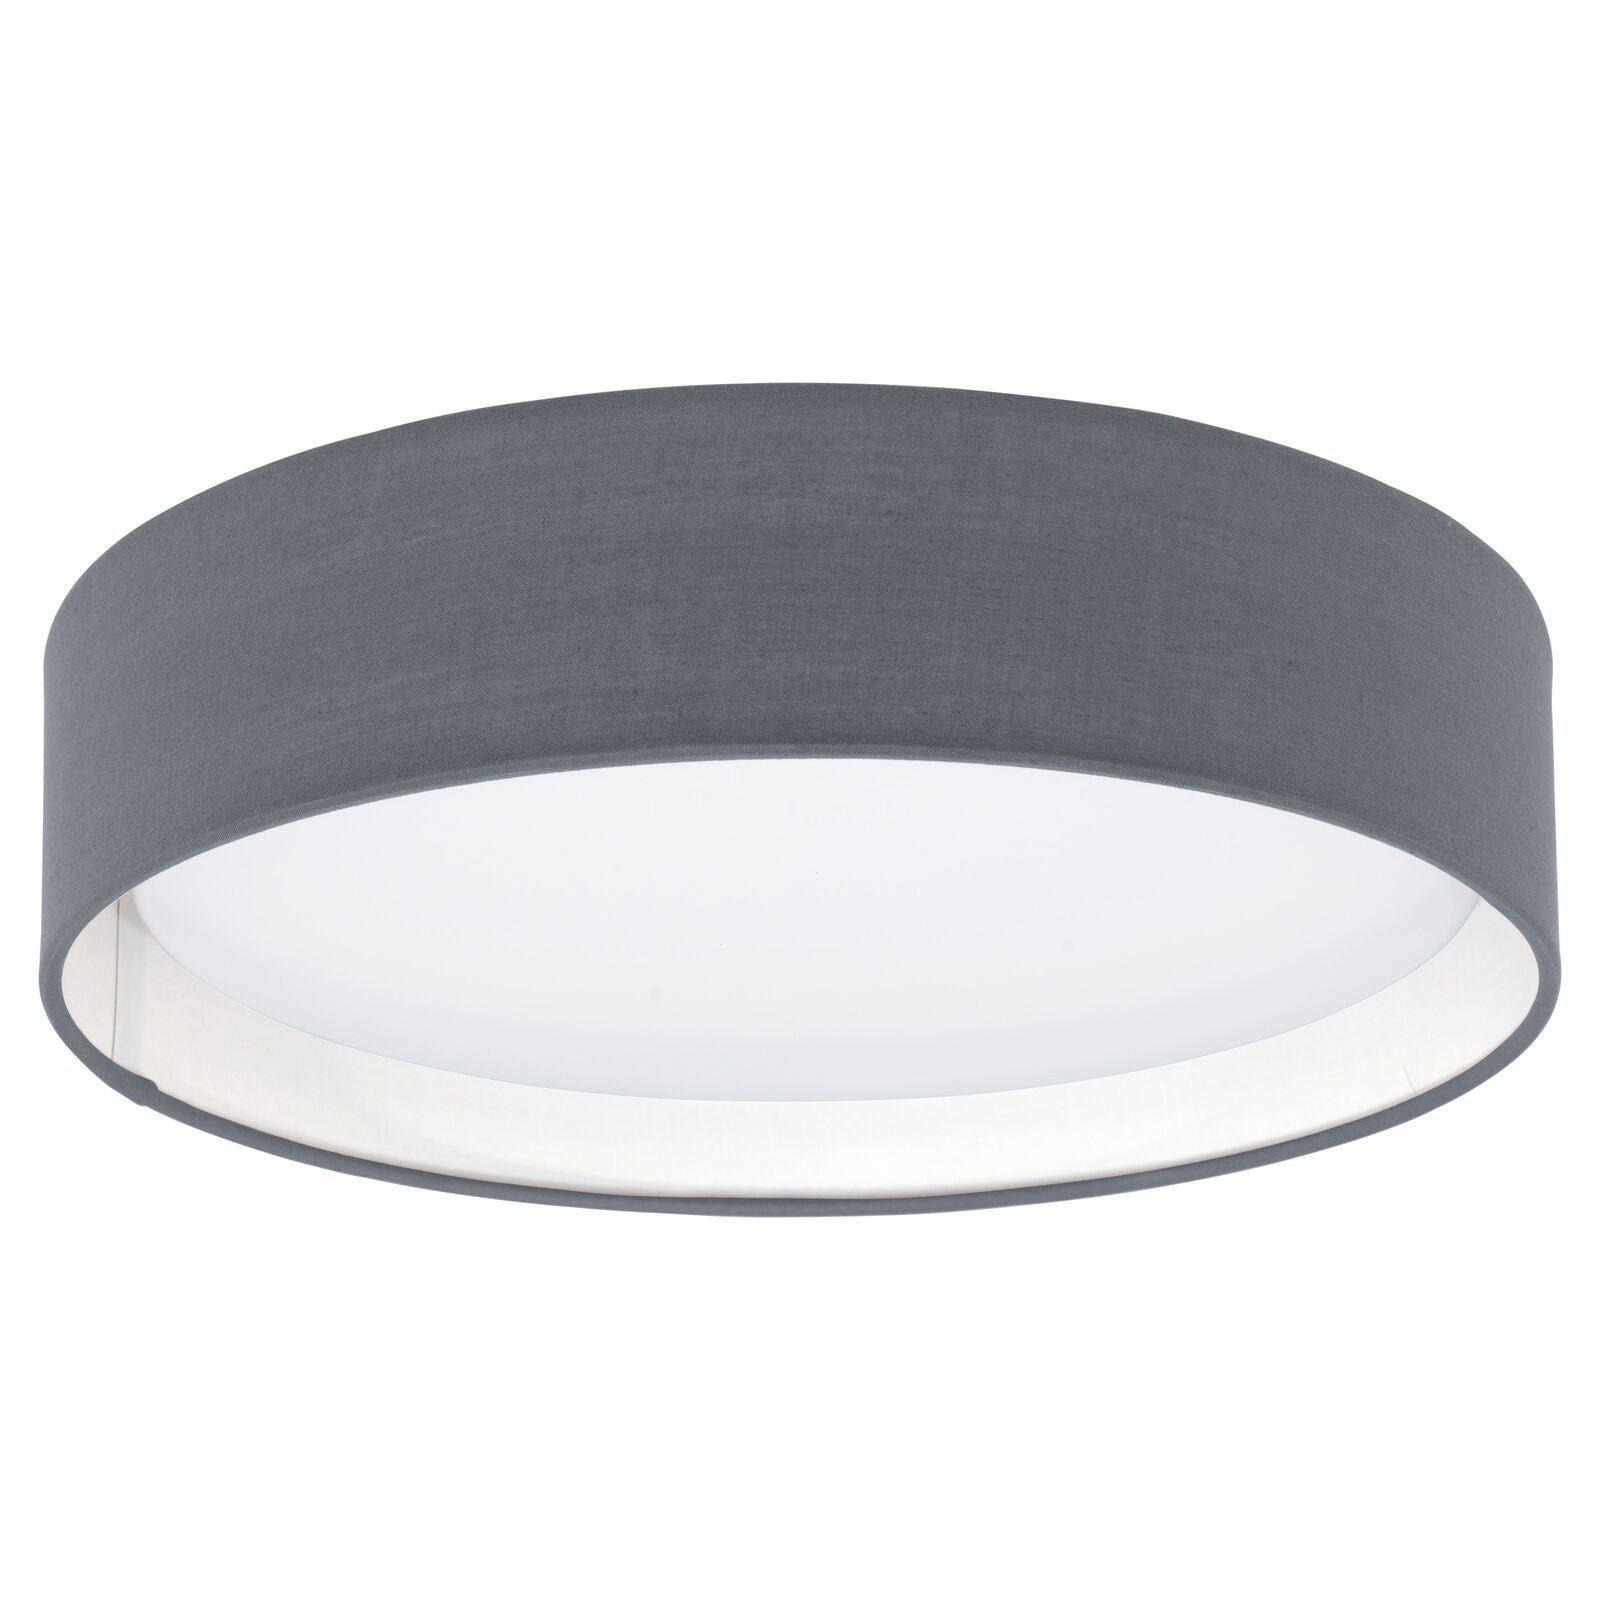 Flush Ceiling Light Colour White Steel Shade Grey & Plastic Bulb LED 11W - image 1